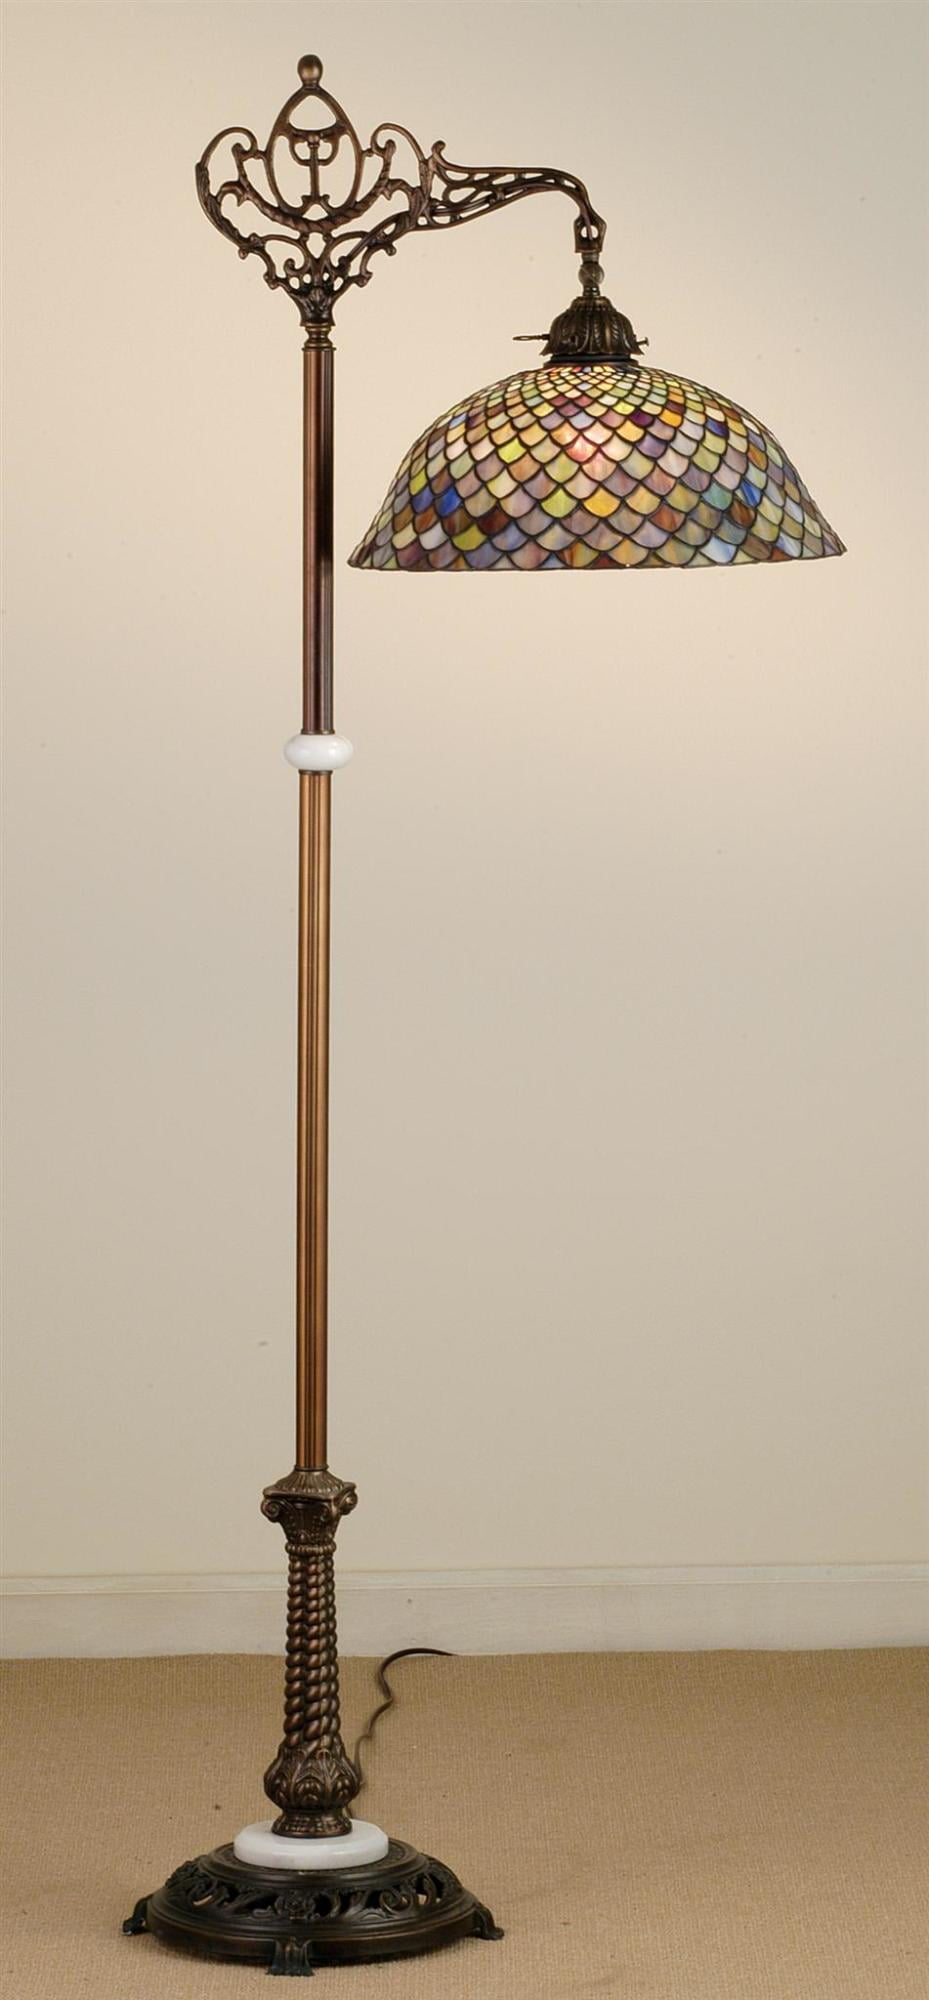 60"H Tiffany Fishscale Bridge Arm Floor Lamp